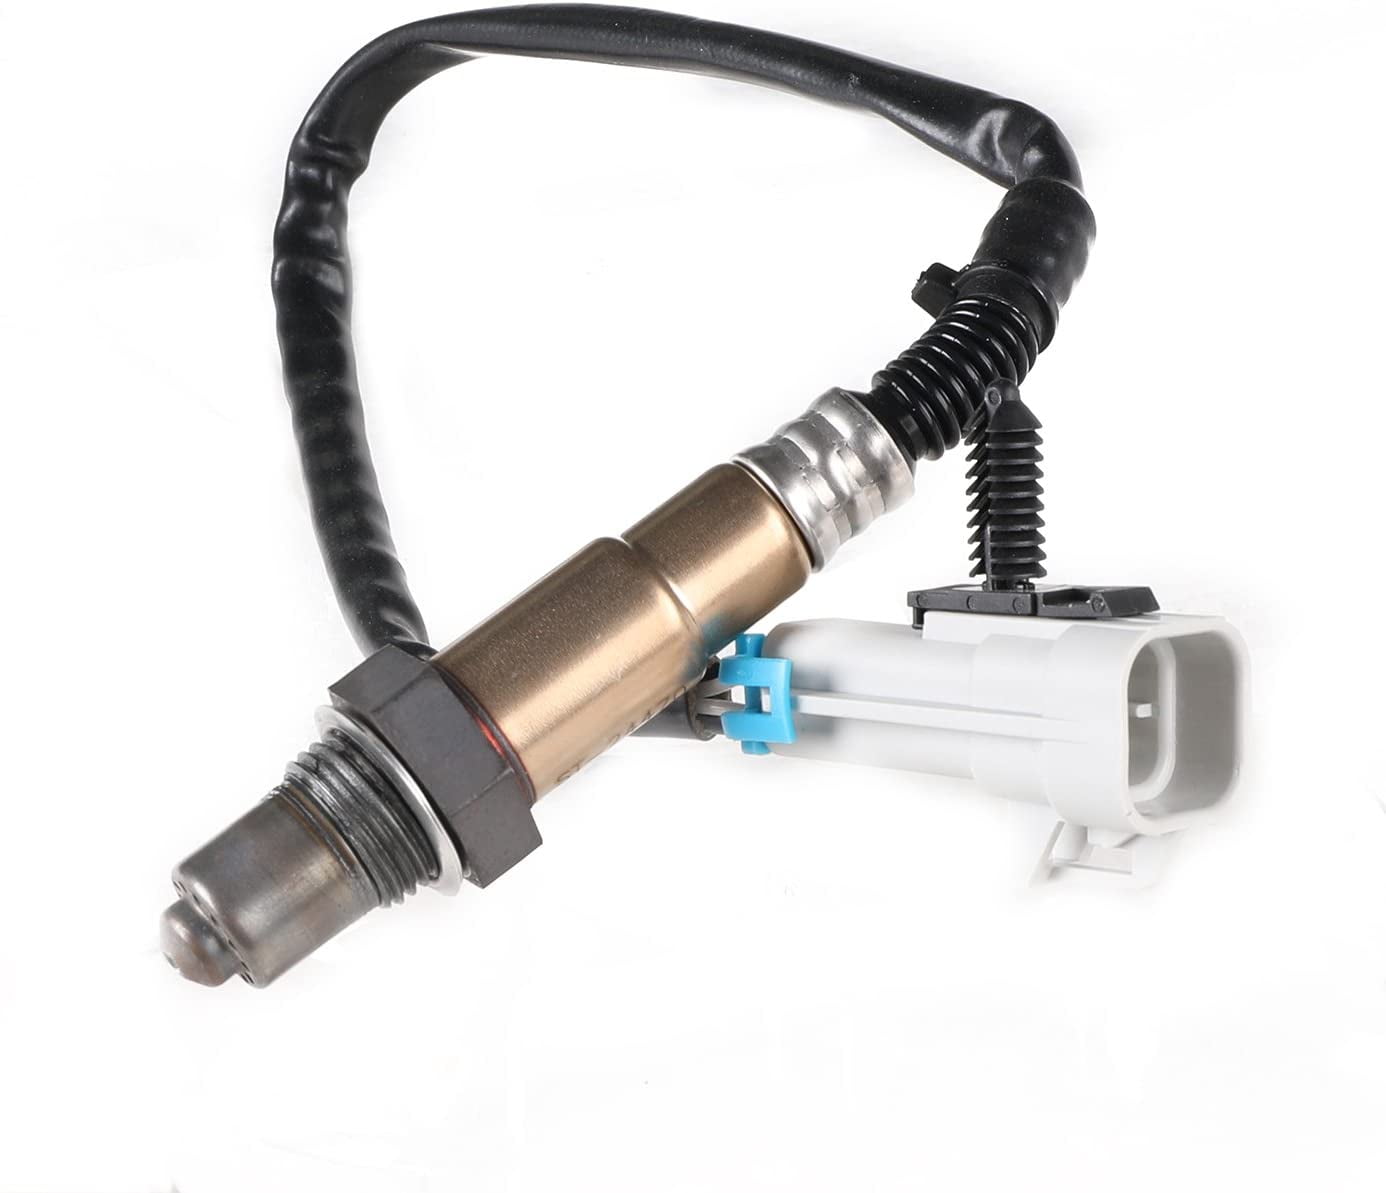 2 Upstream & 2 Downstream Oxygen Sensor Replaces 250-24470 Pack of 4 O2 Oxygen Sensor Compatible with Buick Chevrolet GMC Pontiac 